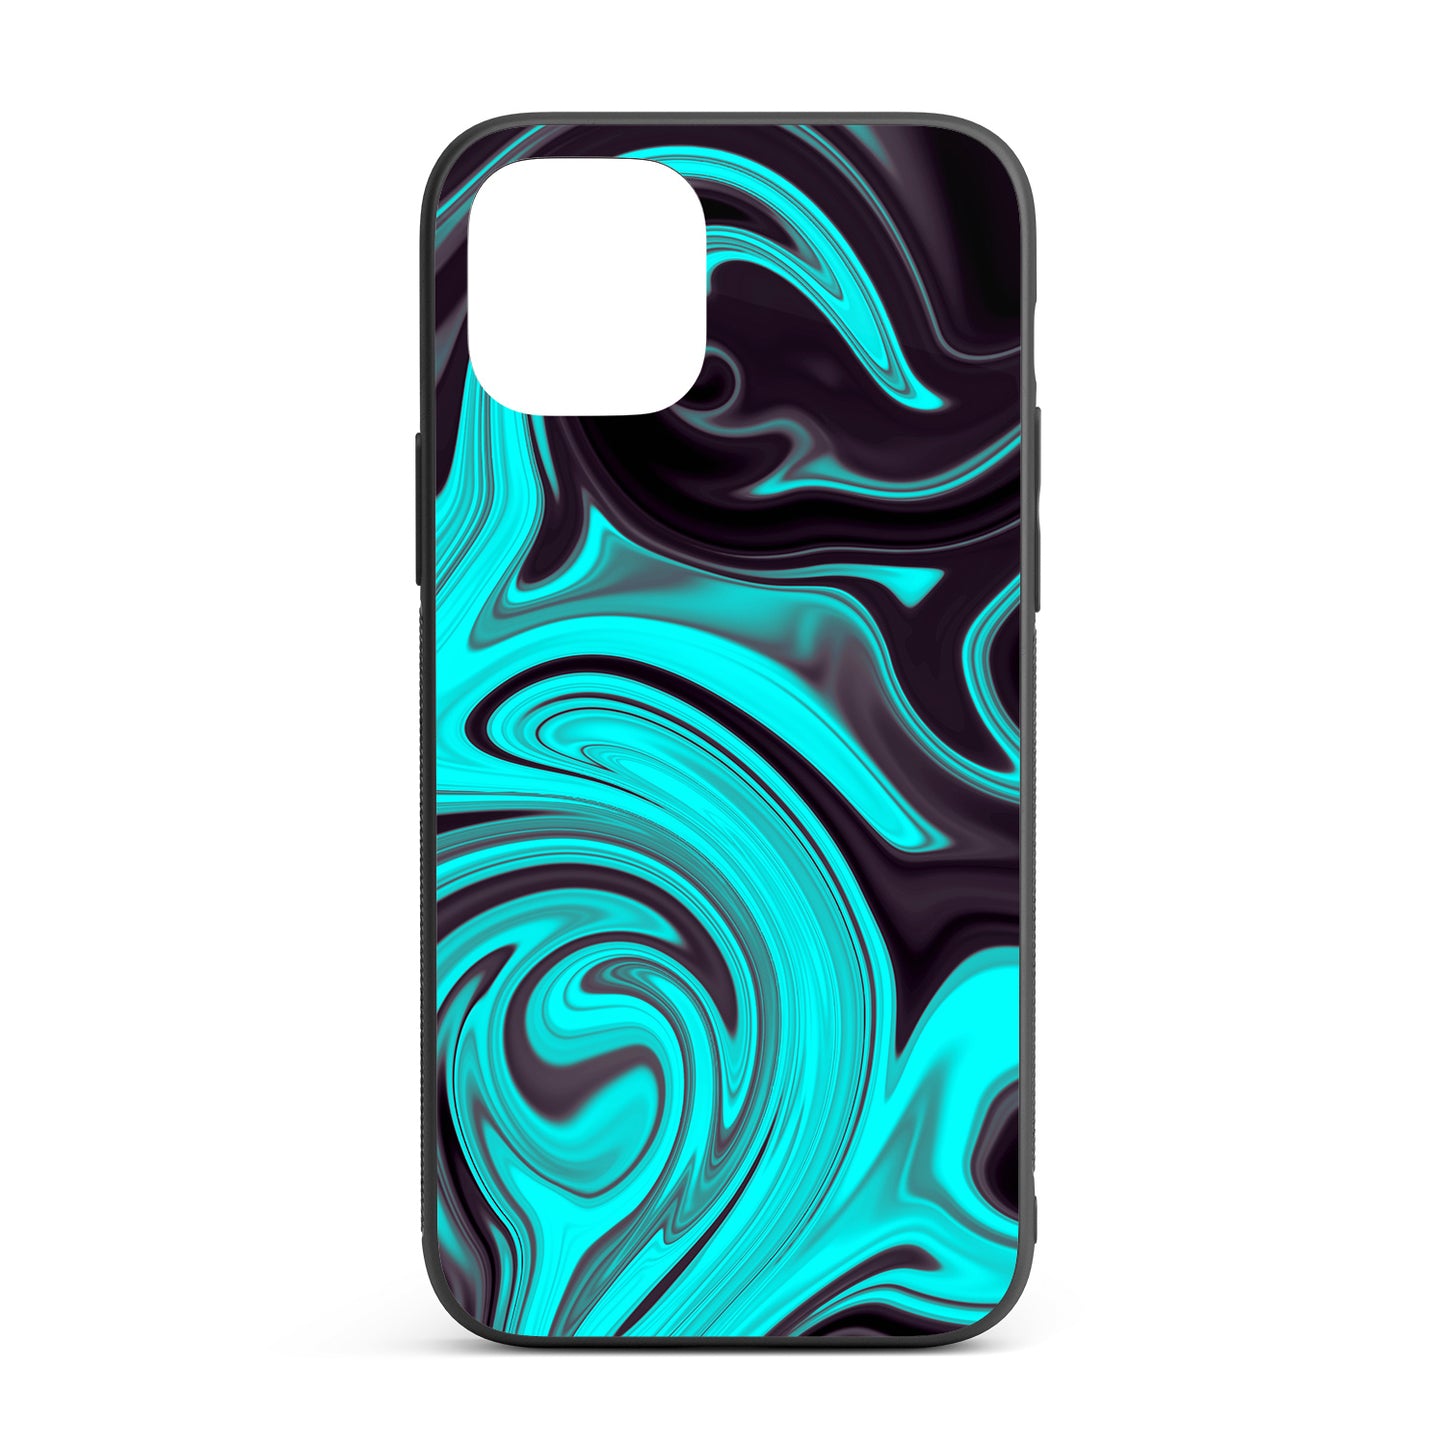 Aqua liquid marble pattern iPhone glass case